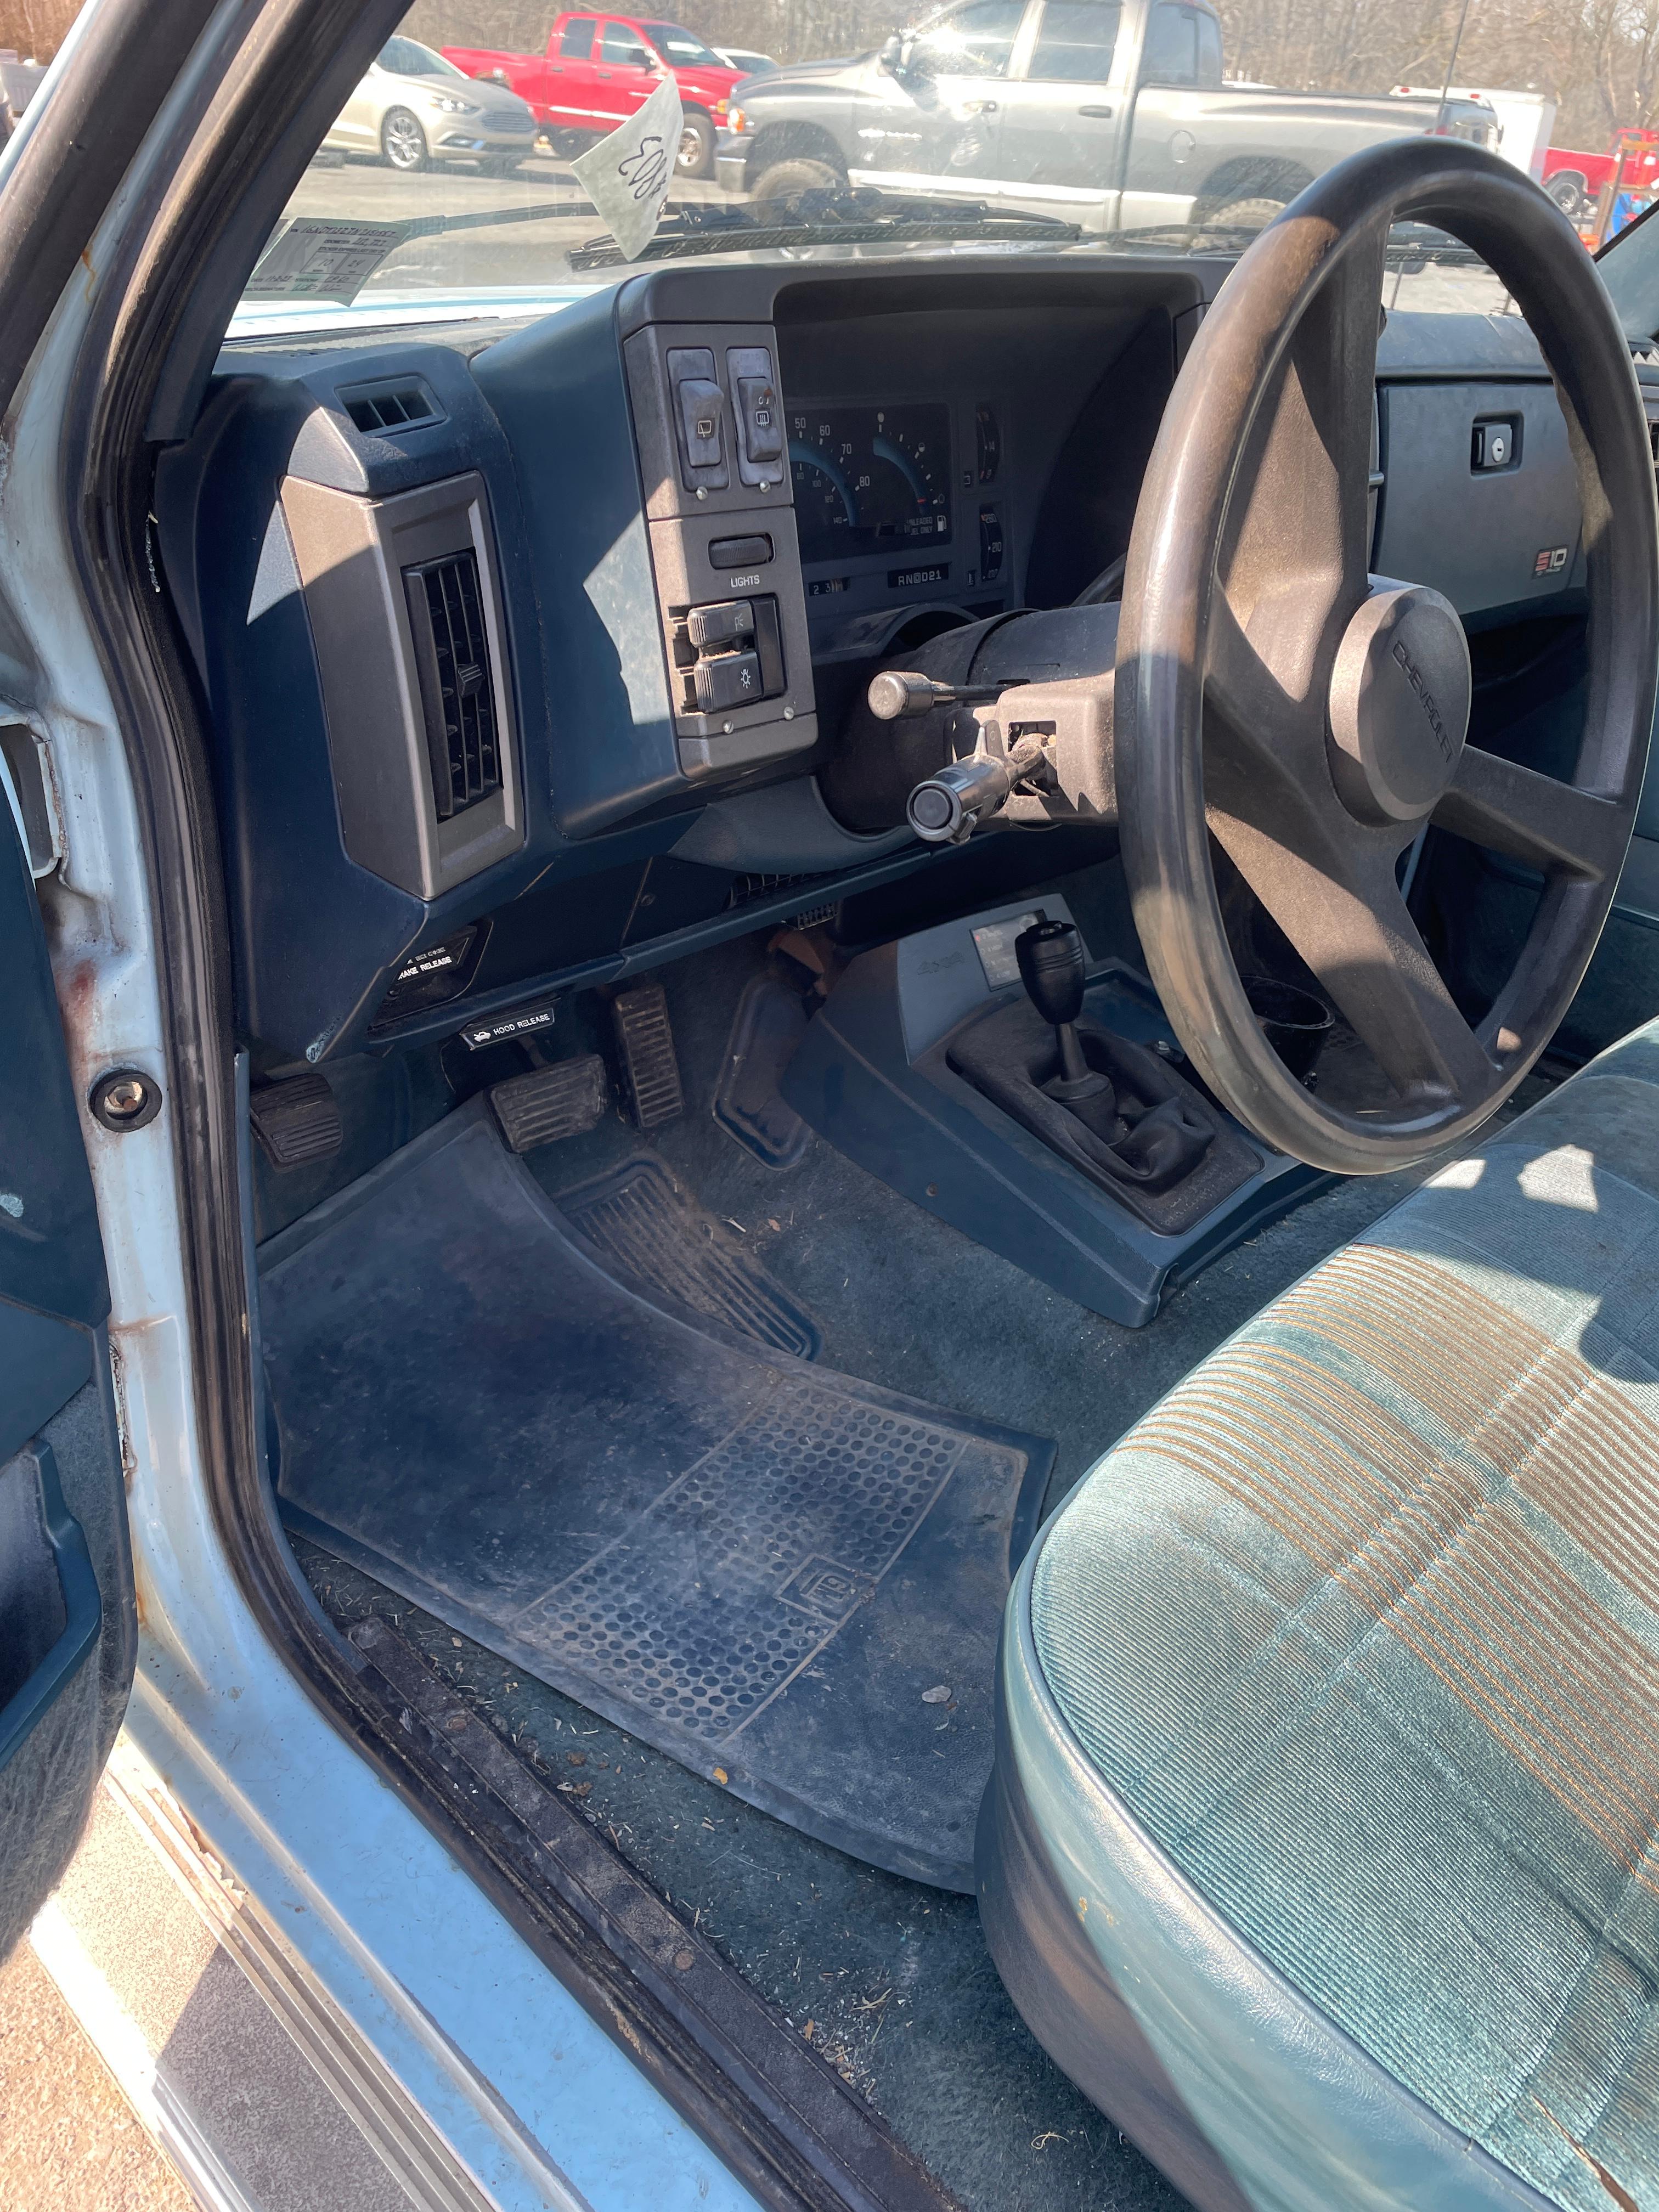 1991 Chevy Blazer 4X4